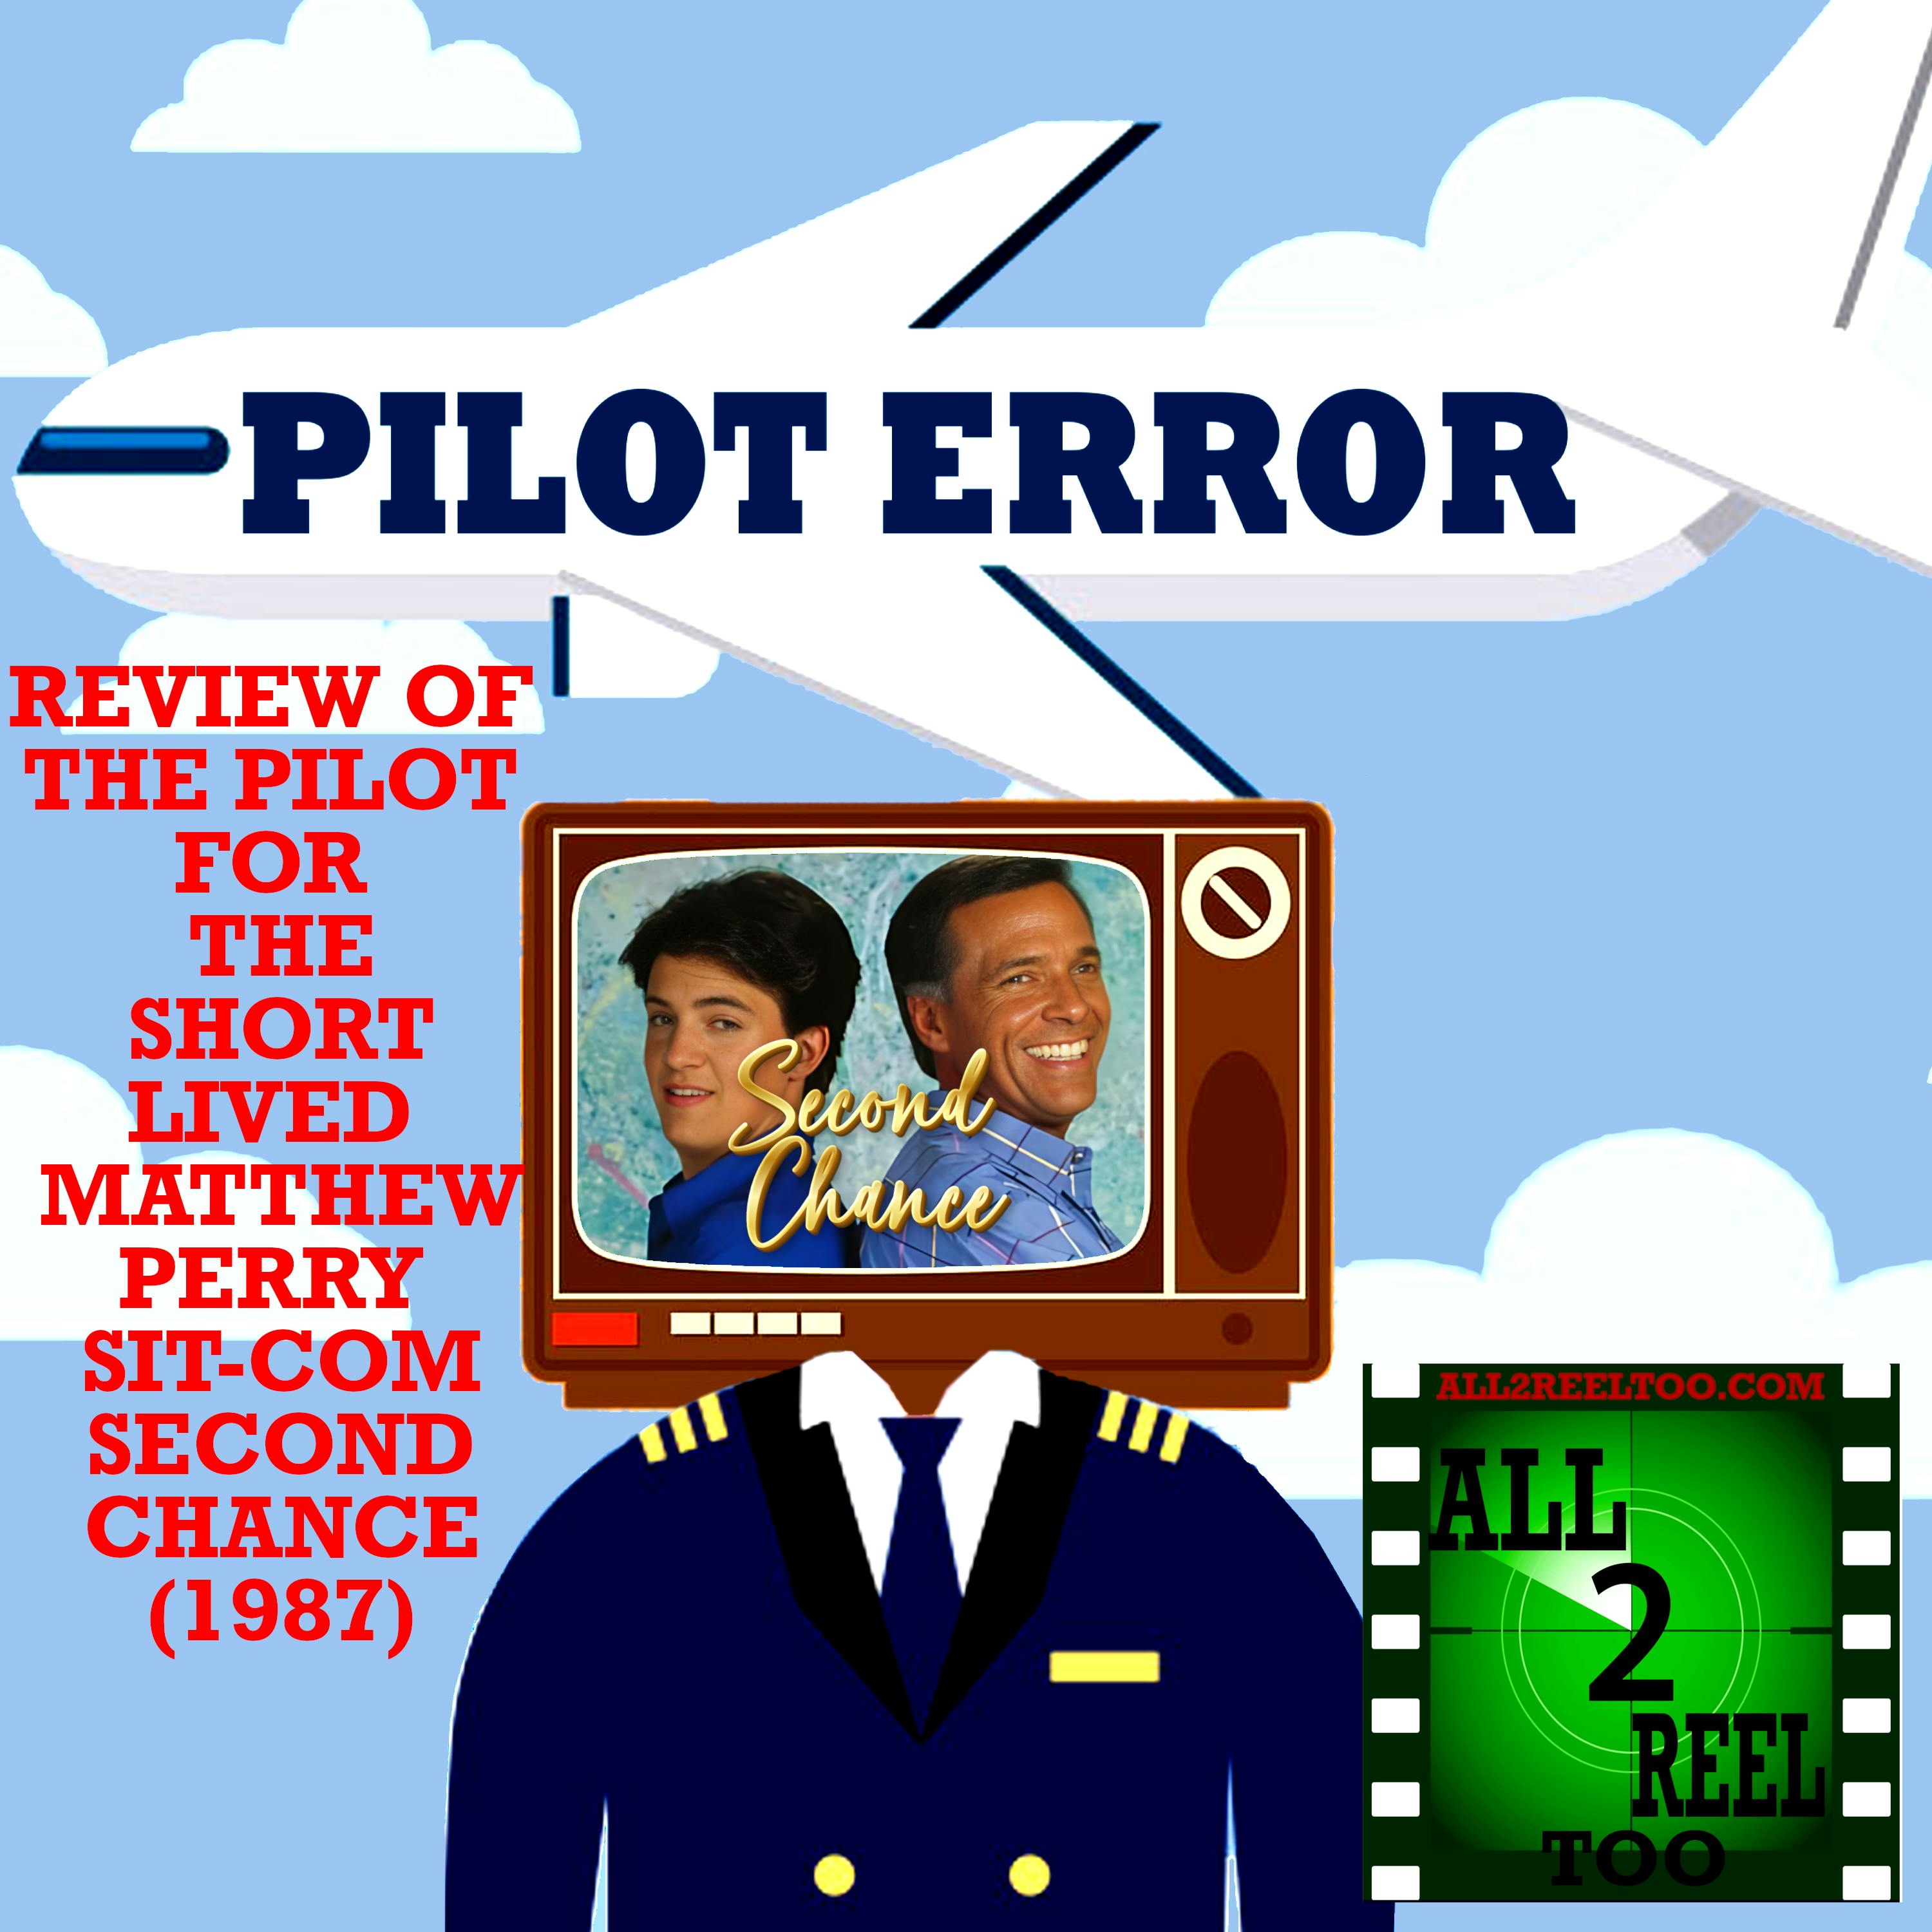 Second Chance (1987) - PILOT ERROR REVIEW